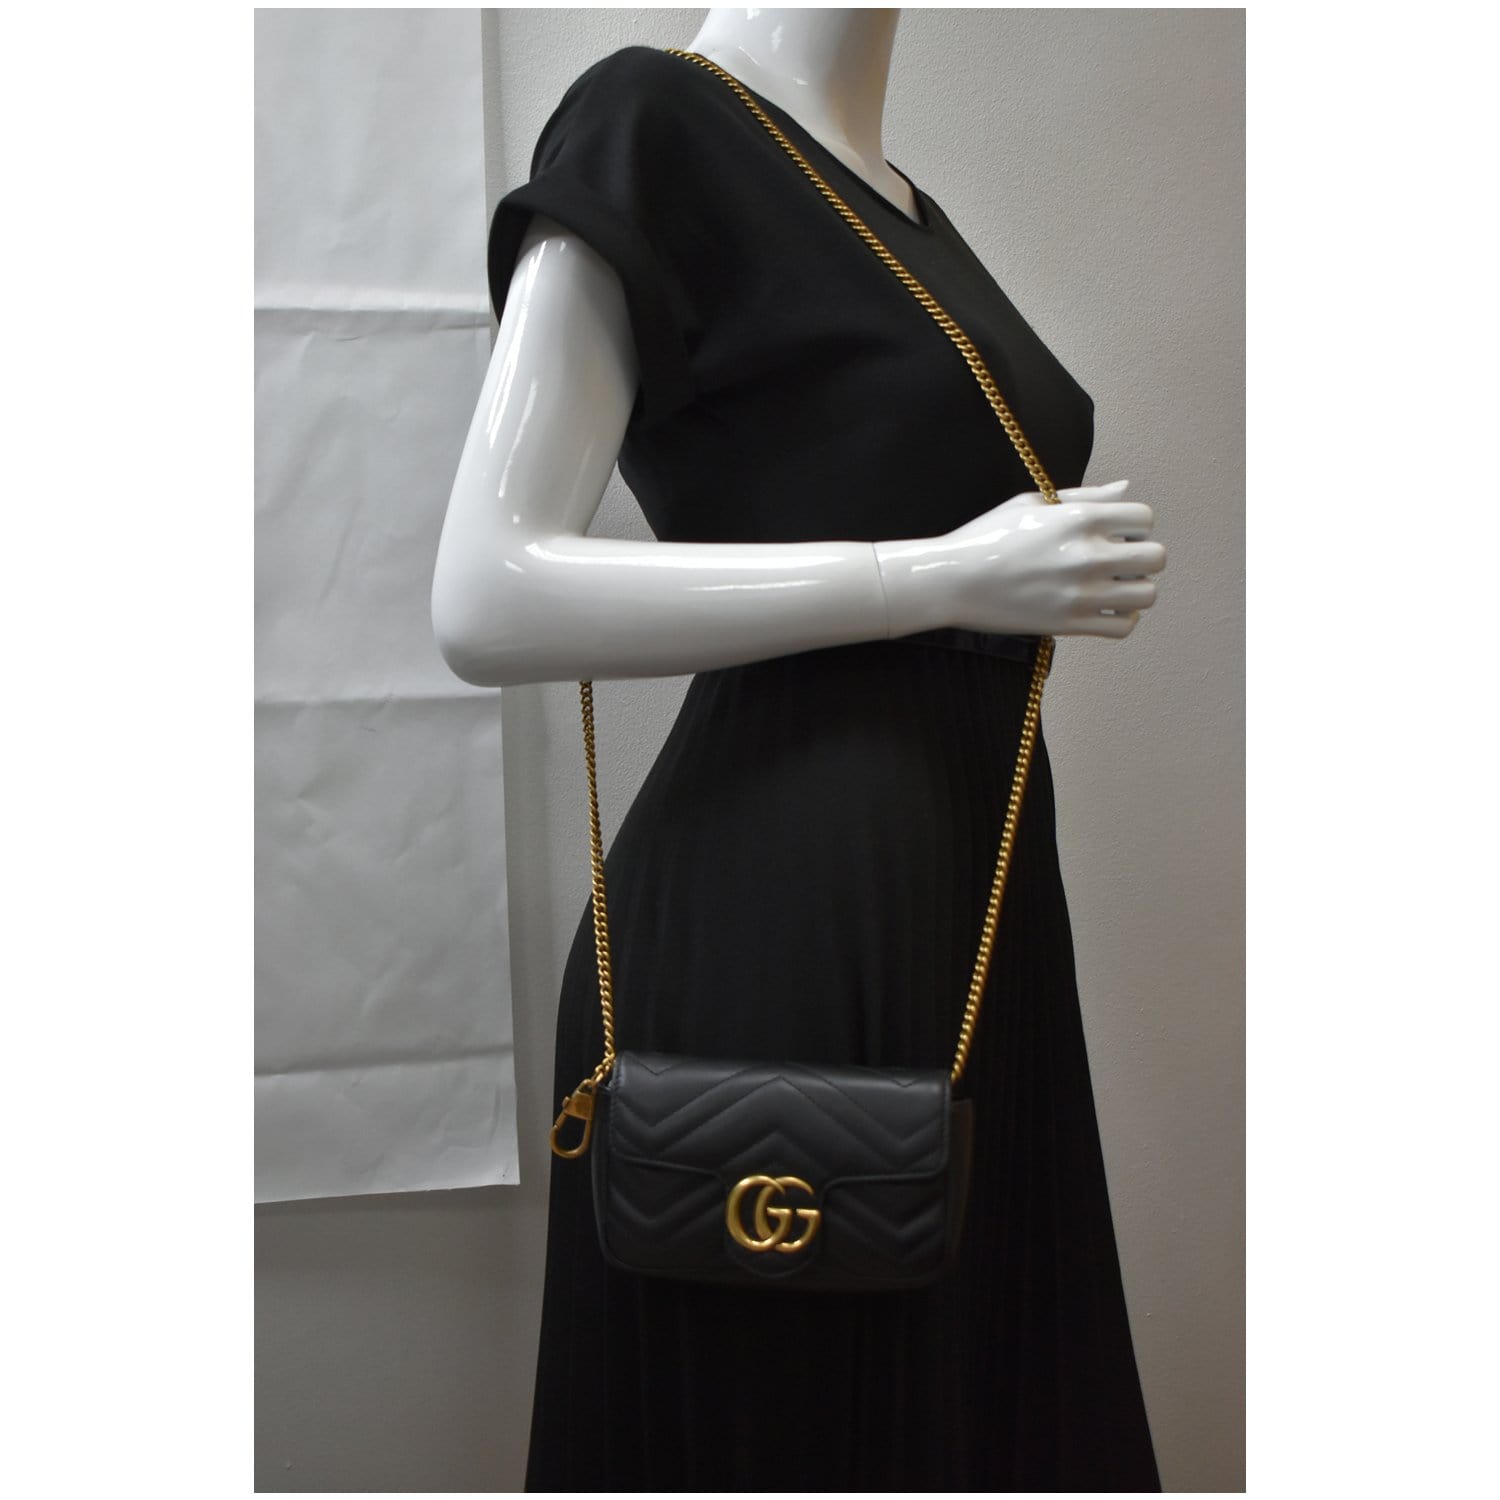 Gucci GG Marmont Matelassé Mini Bag in Black